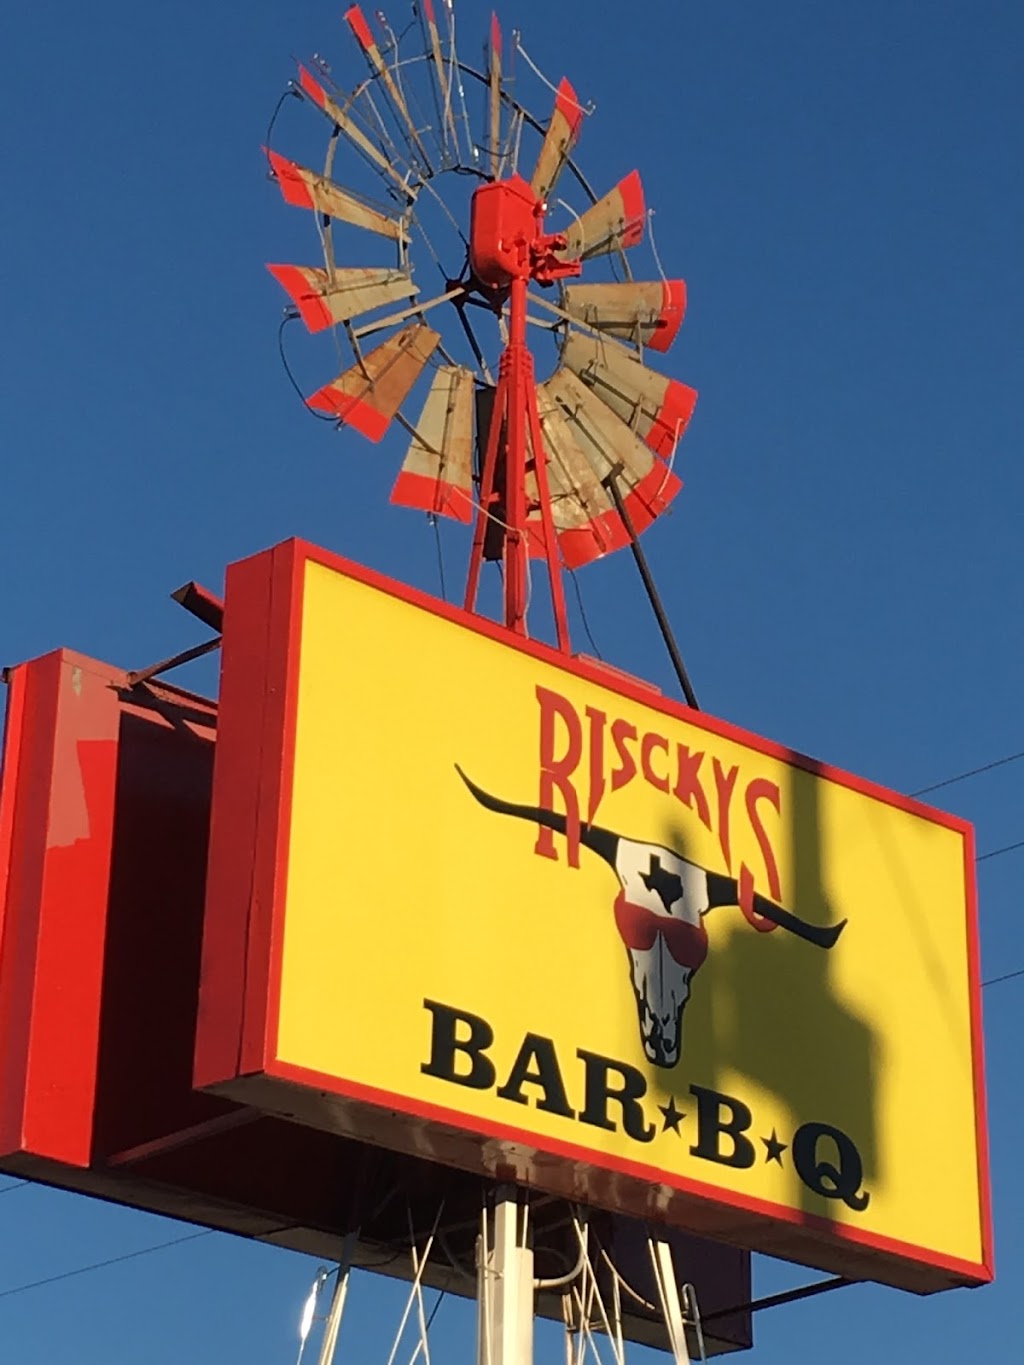 Risckys BAR-B-Q - restaurant  | Photo 9 of 10 | Address: 9000 Benbrook Blvd, Fort Worth, TX 76126, USA | Phone: (817) 249-3320